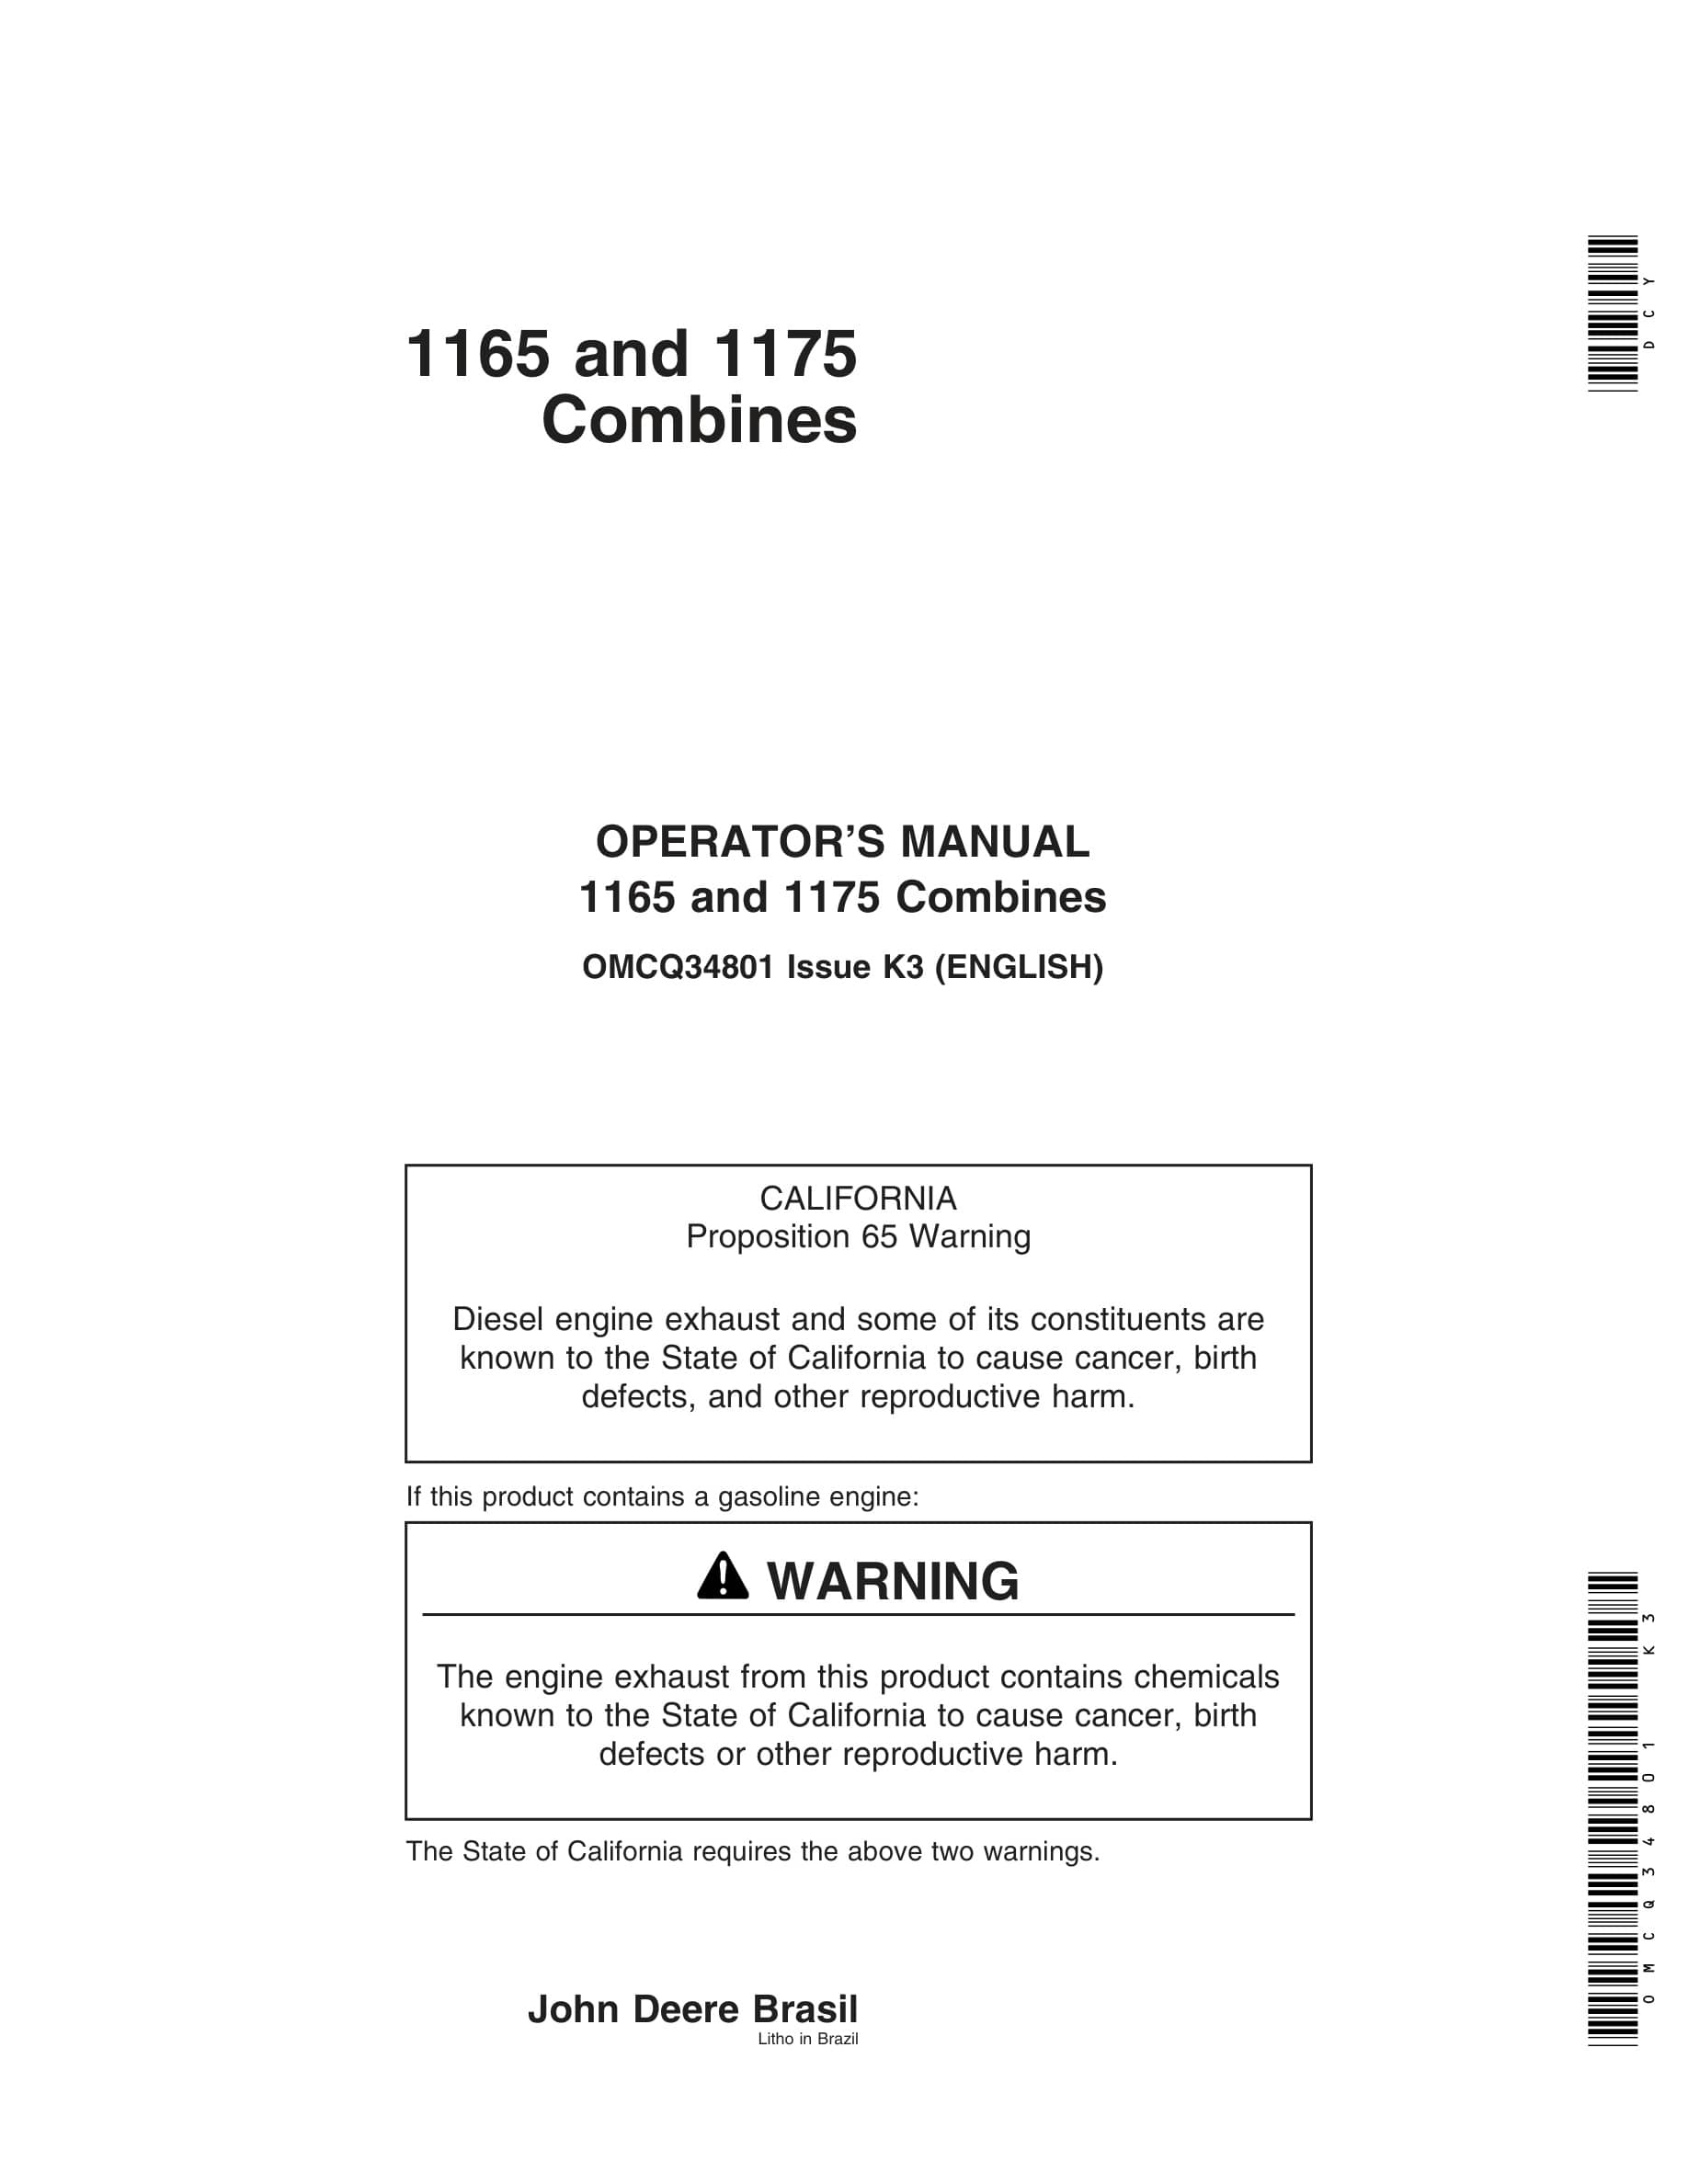 John Deere 1165 and 1175 Combine Operator Manual OMCQ34801-1